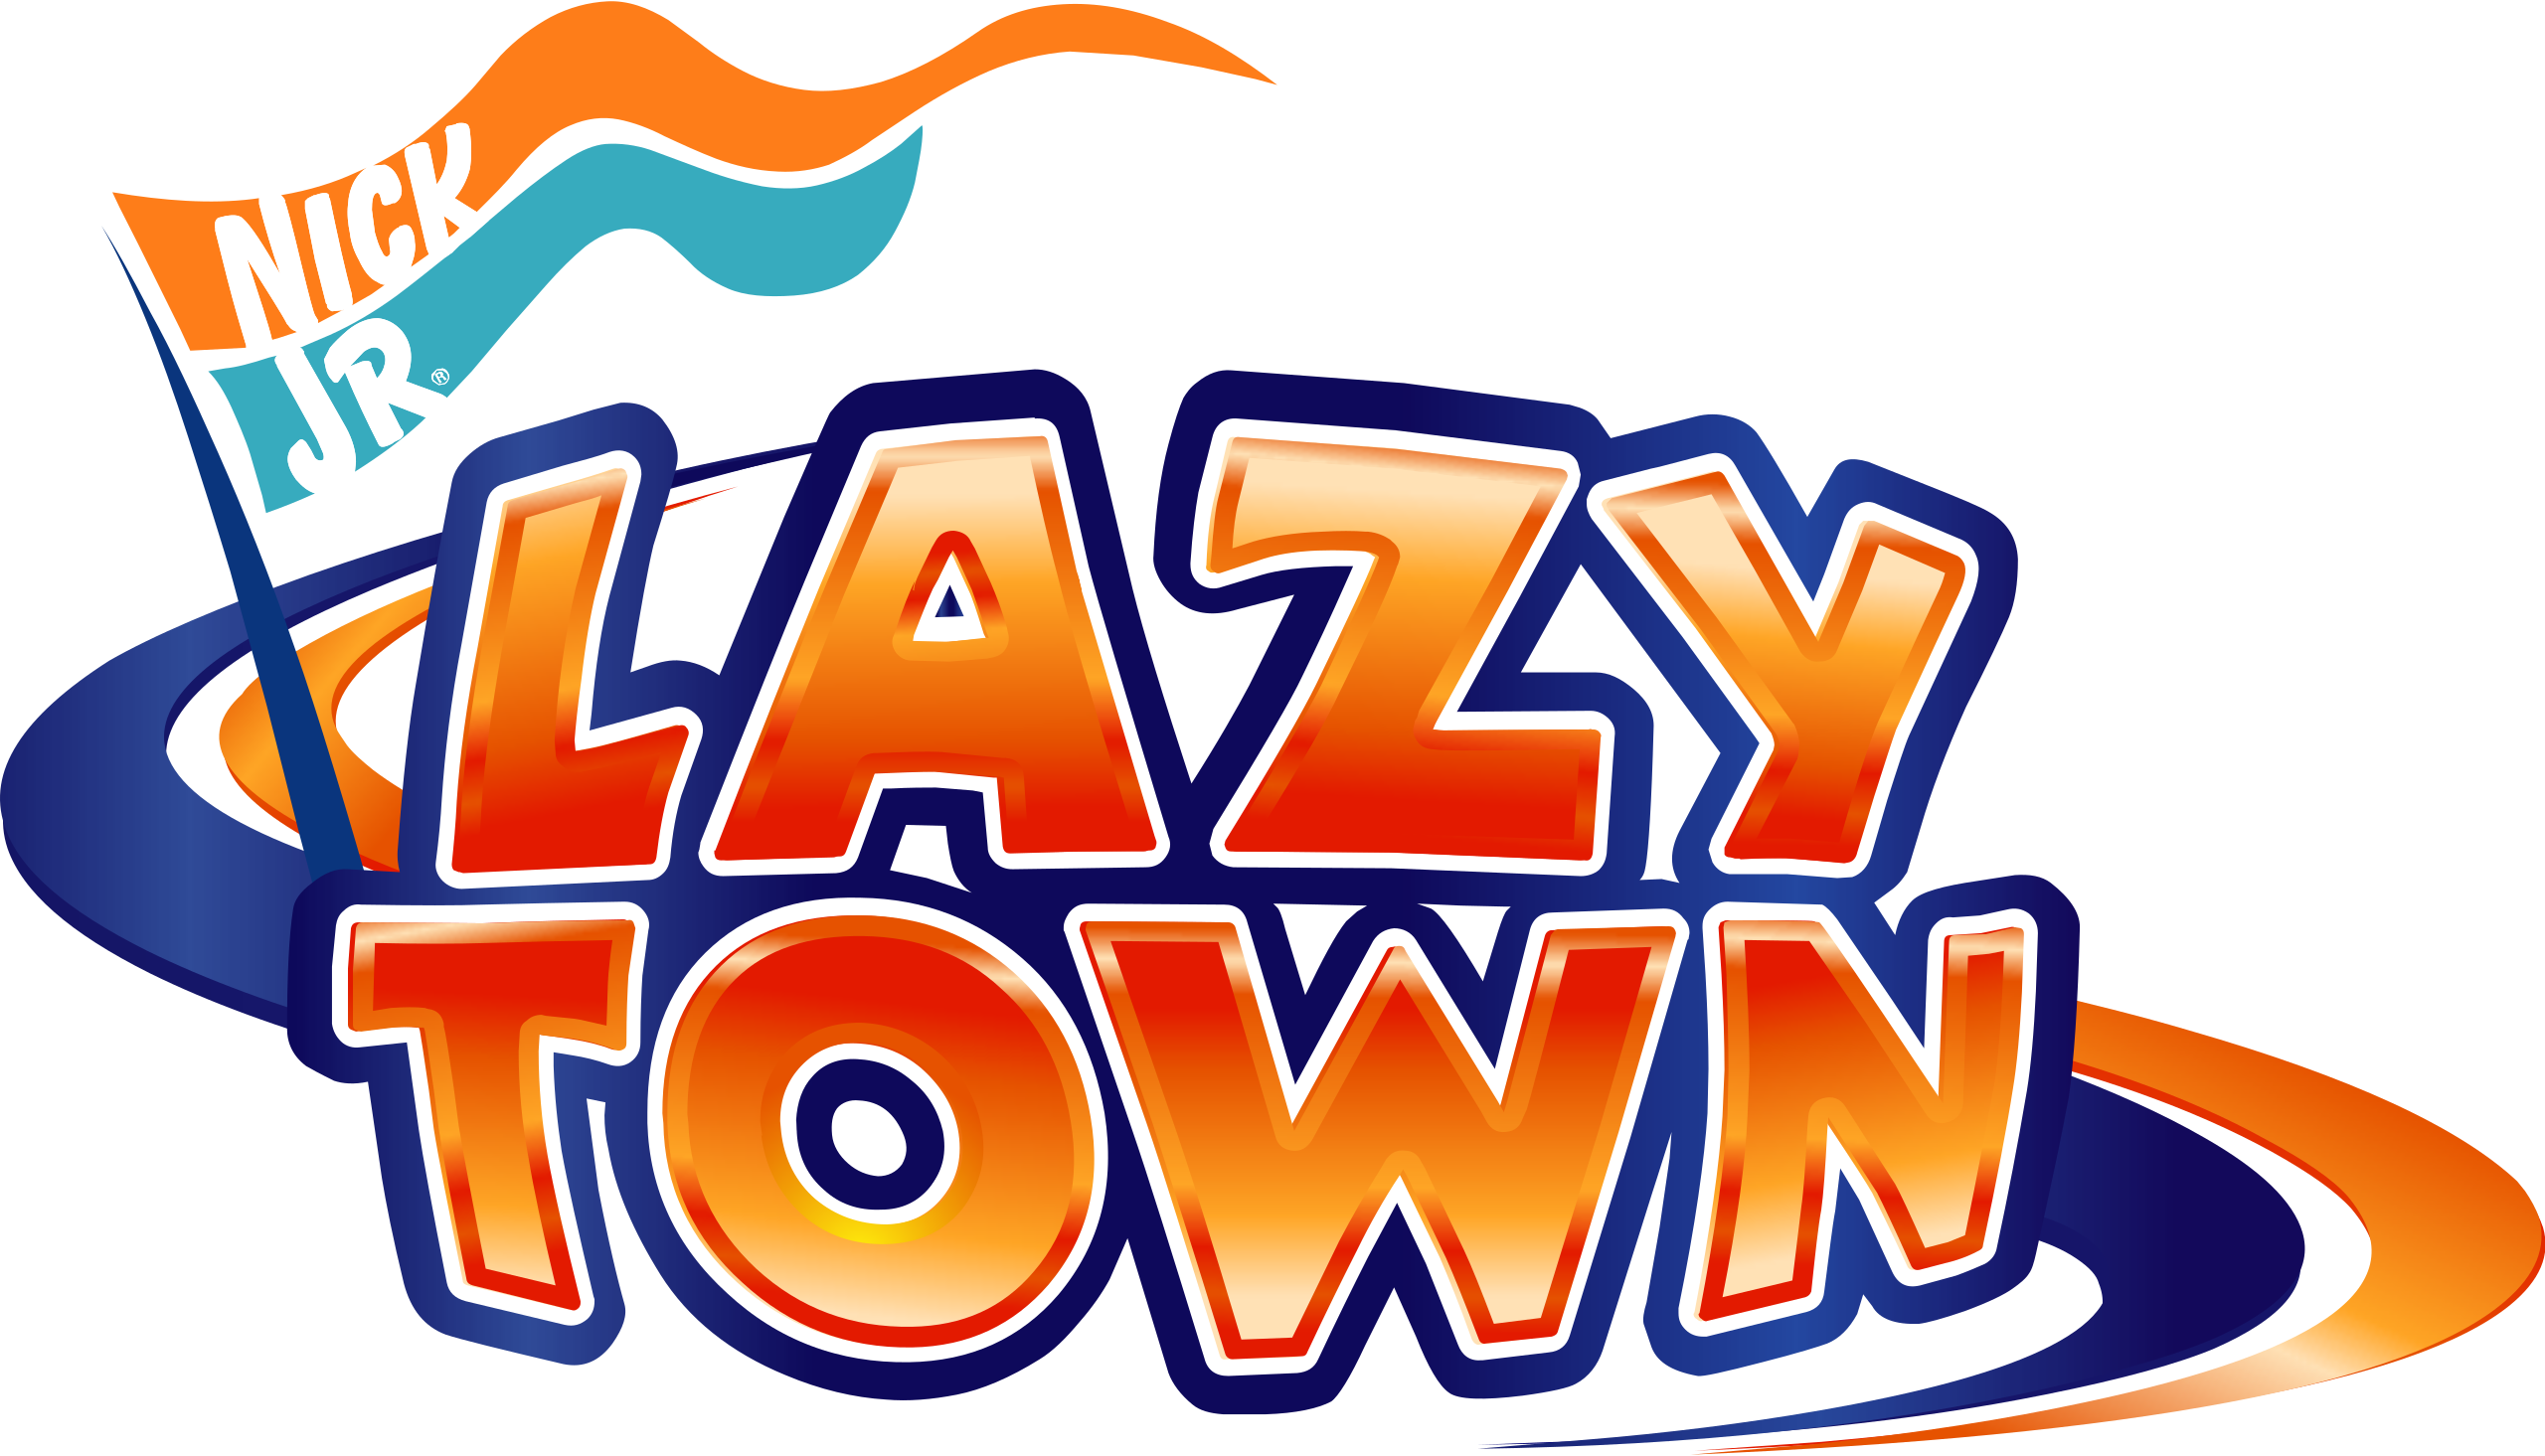 LazyTown logo.svg